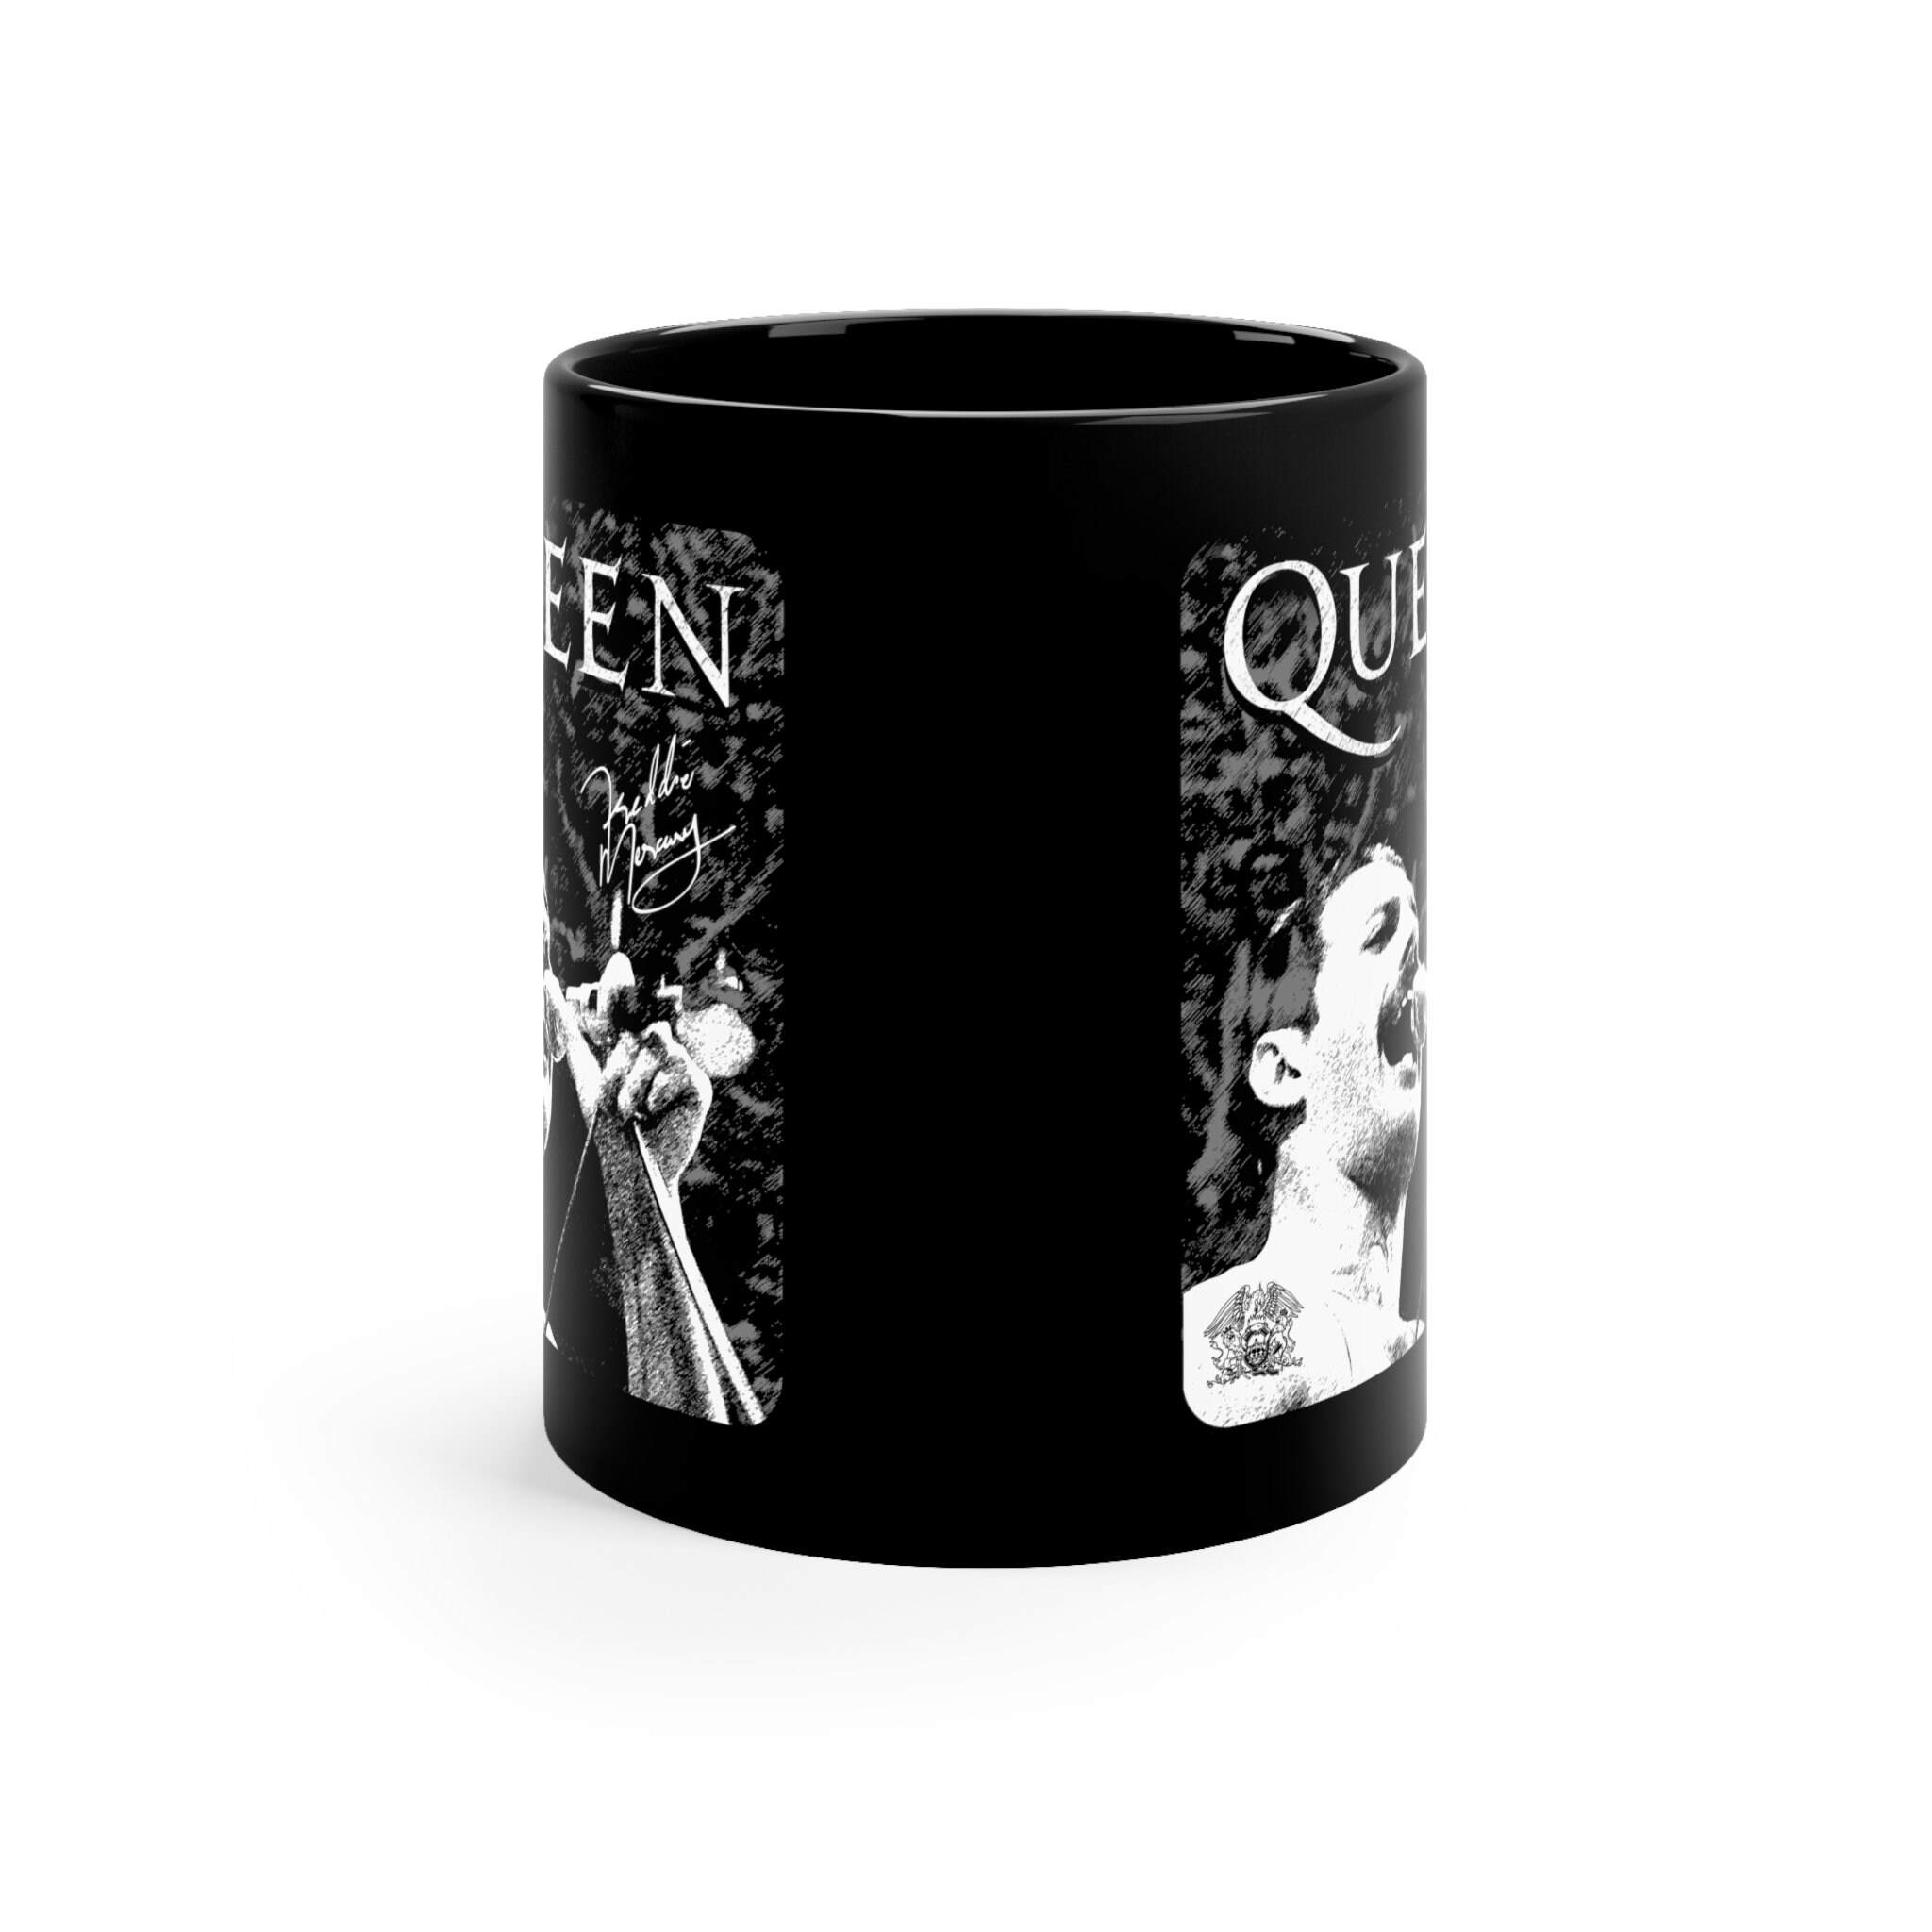 Queen Freddie Mercury Mug - Iconic Rock Band Coffee Mug